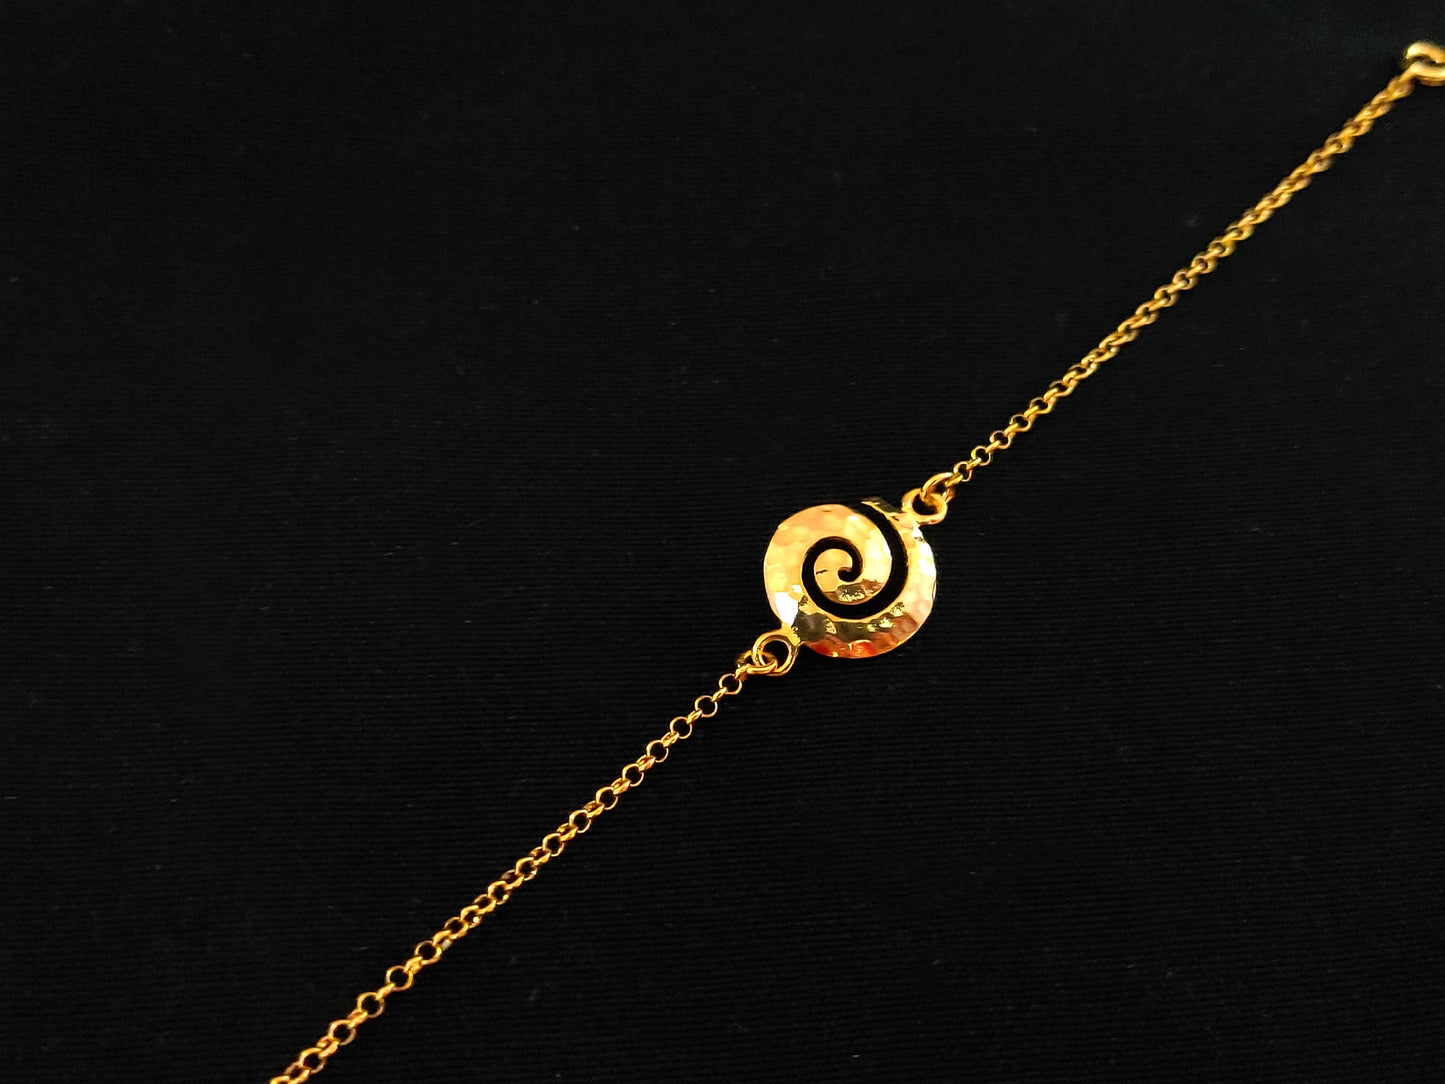 Sterling Silber 925 Altgriechisch gehämmert Spirale Kreis des Lebens feine Kette vergoldet verstellbares Armband 15 mm, Griechischer Armband